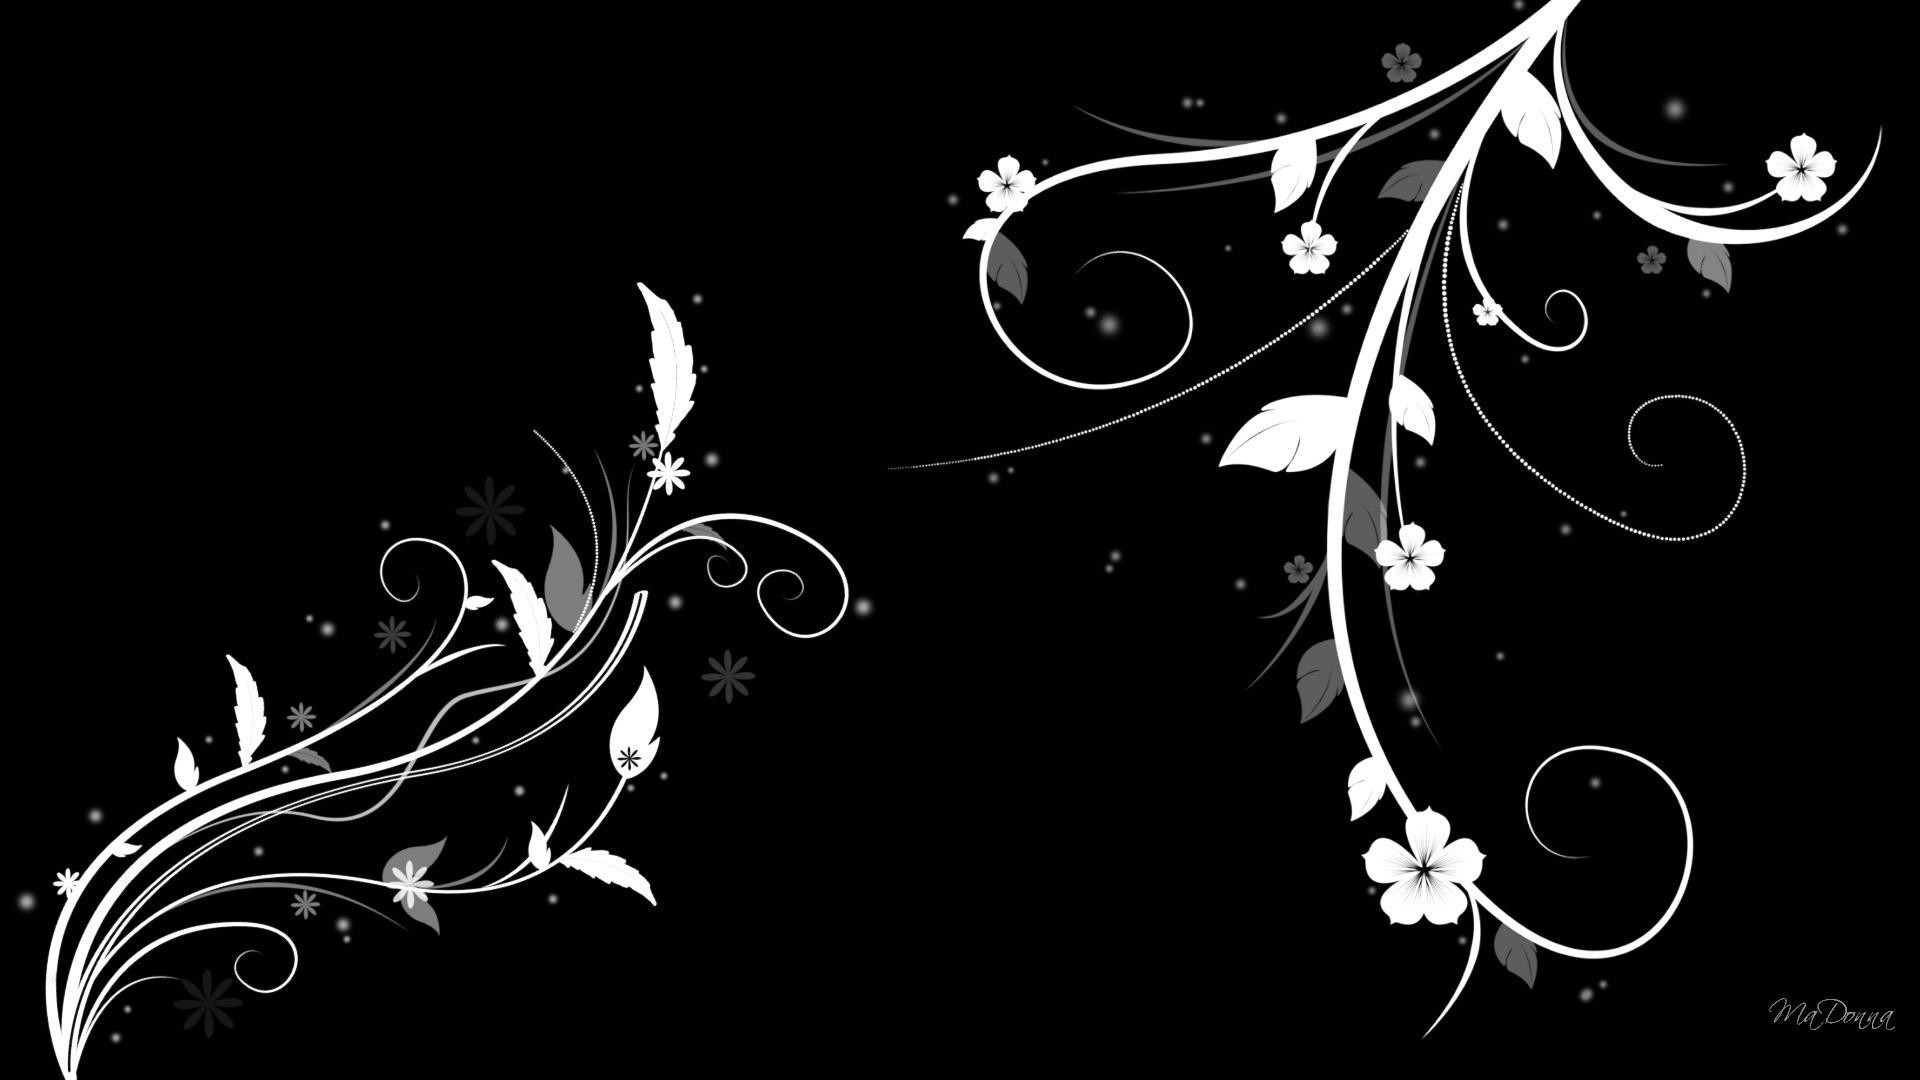 1920x1080 Wallpaper Of Black Flowers Black And White Flowers Wallpapers Hd |  Pixelstalk ...